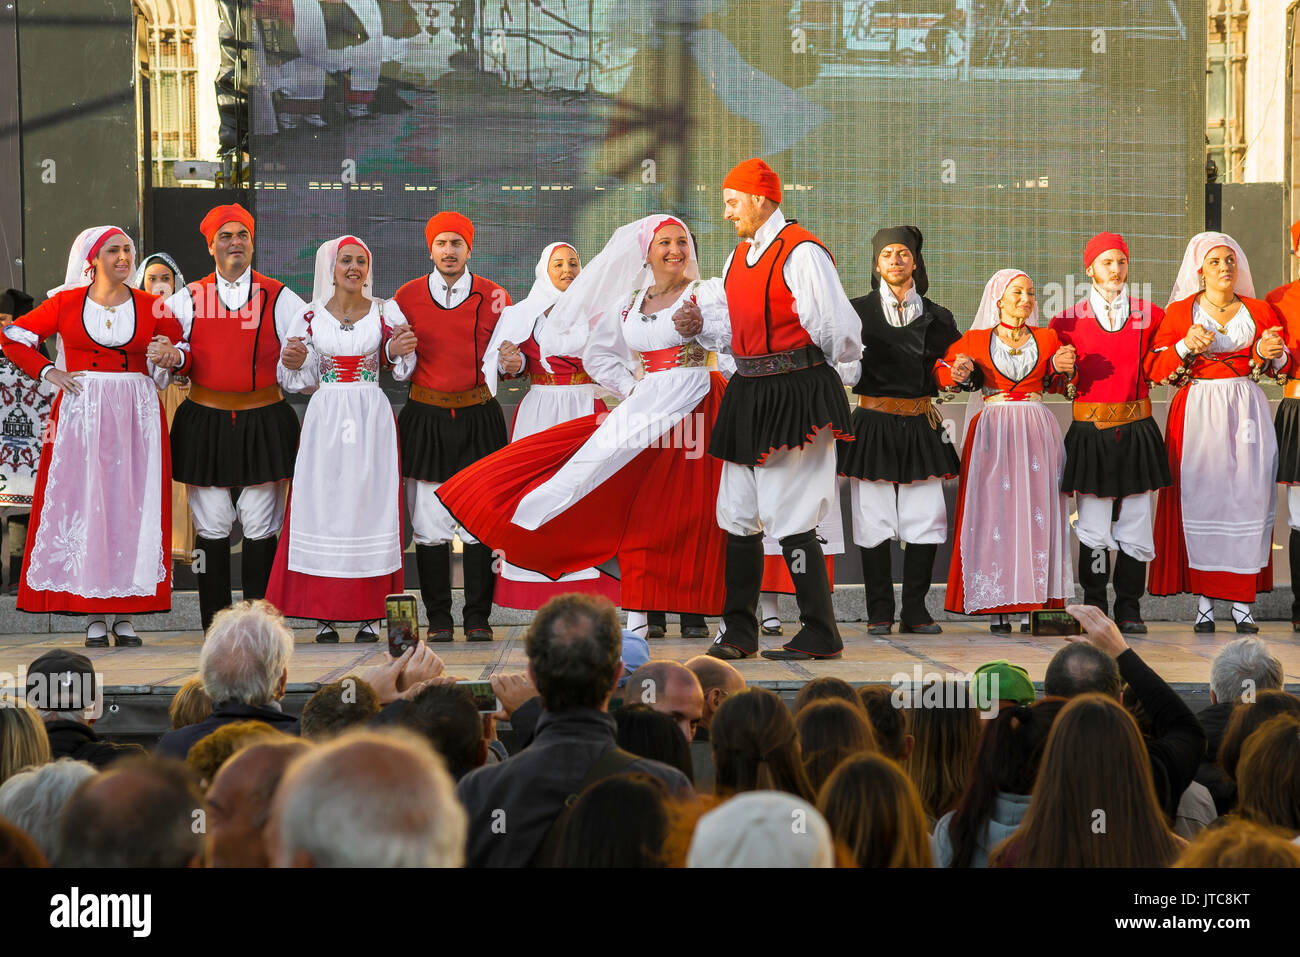 Sardinia folk festival, a traditional folk dance group perform on stage in the  Cavalcata festival in Sassari, Sardinia. Stock Photo